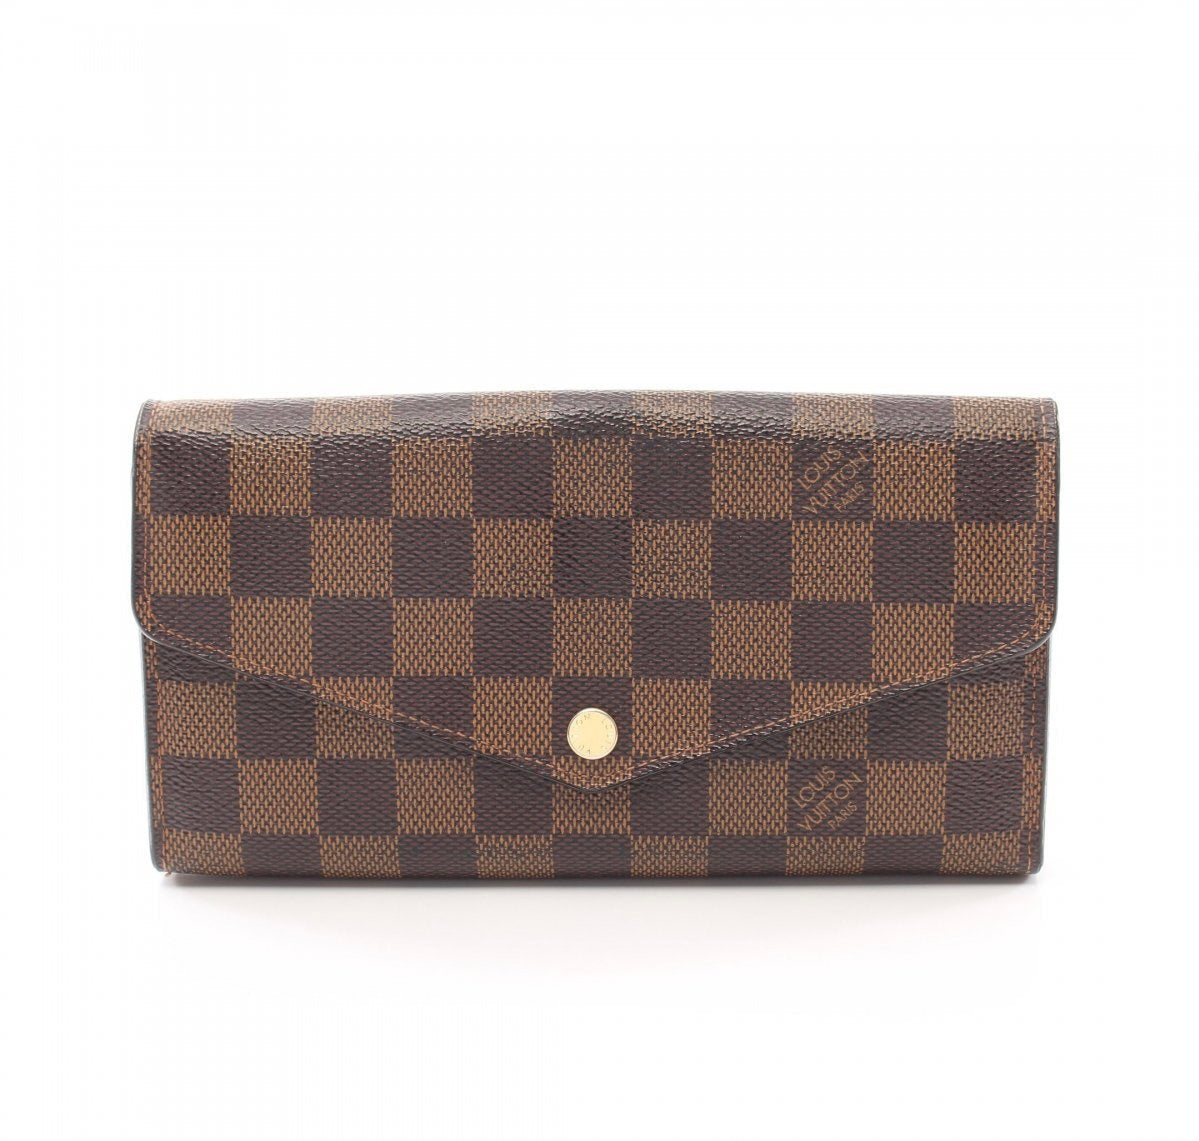 Shop Louis Vuitton PORTEFEUILLE SARAH LV SARAH WALLET Monogram Brown  Leather Long Wallets N63209 by Belleplume